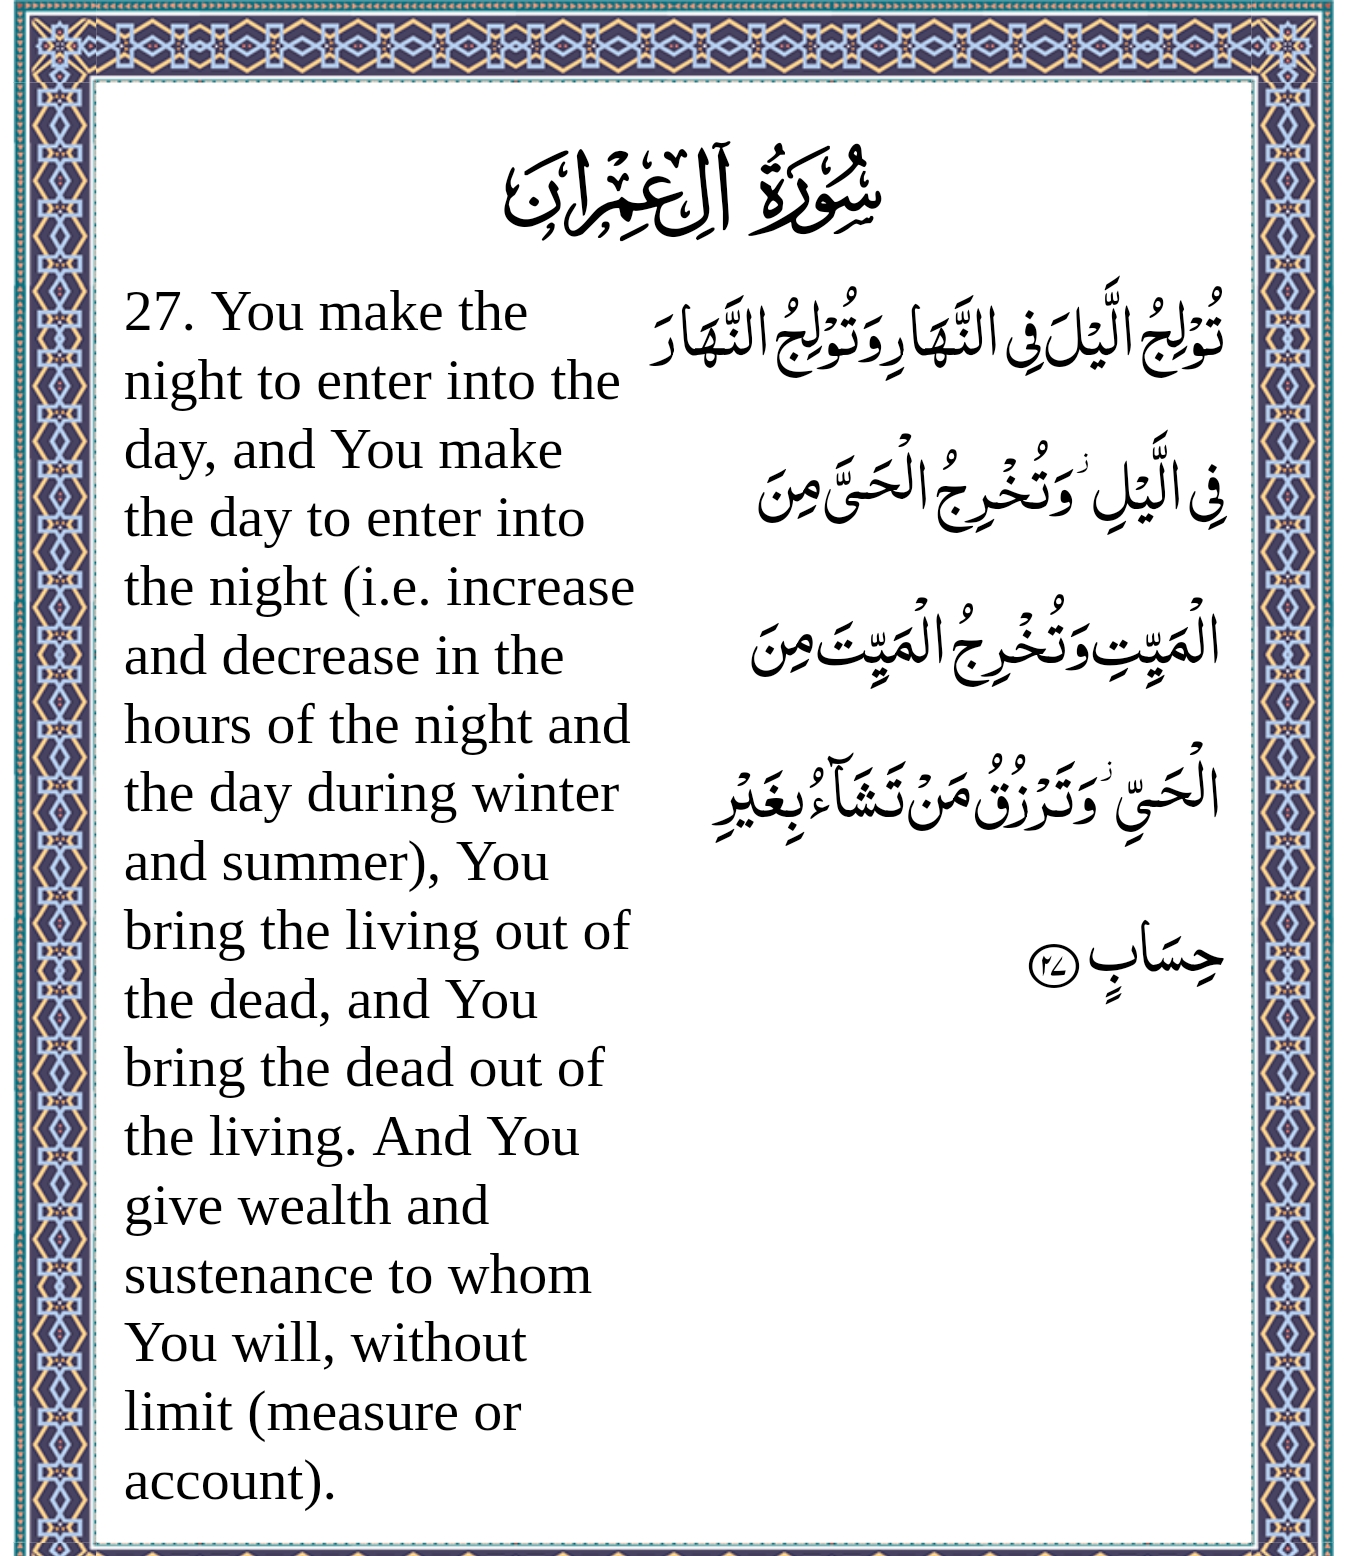 3 Sura Al-E-Imran, Aya 27.